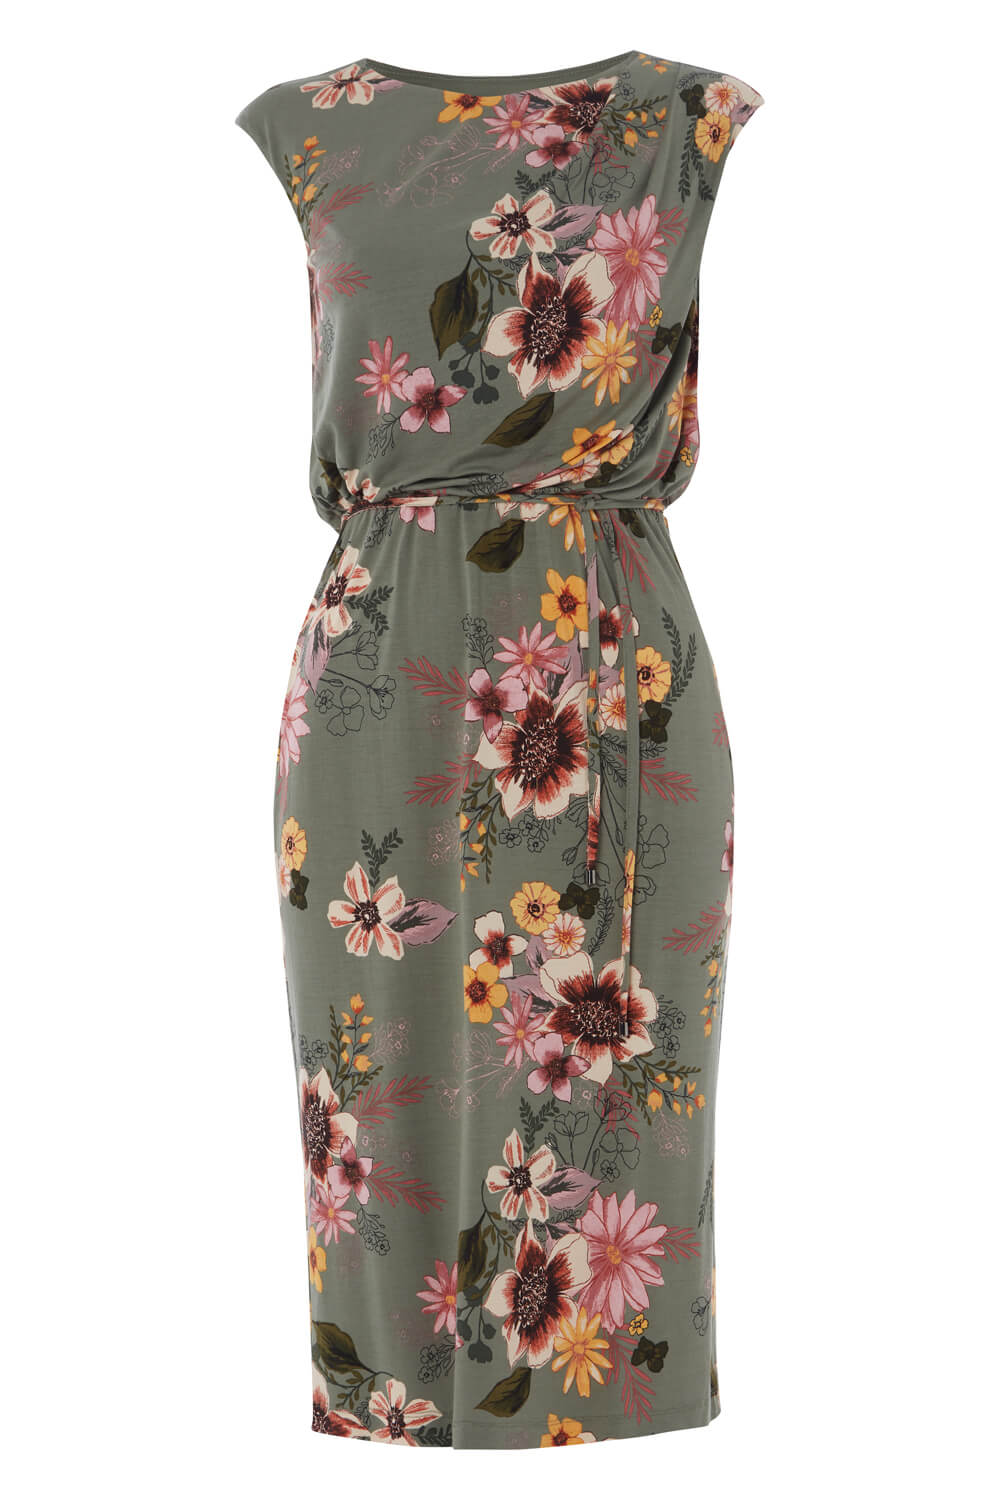 Floral Elasticated Waist Midi Dress in Khaki - Roman Originals UK